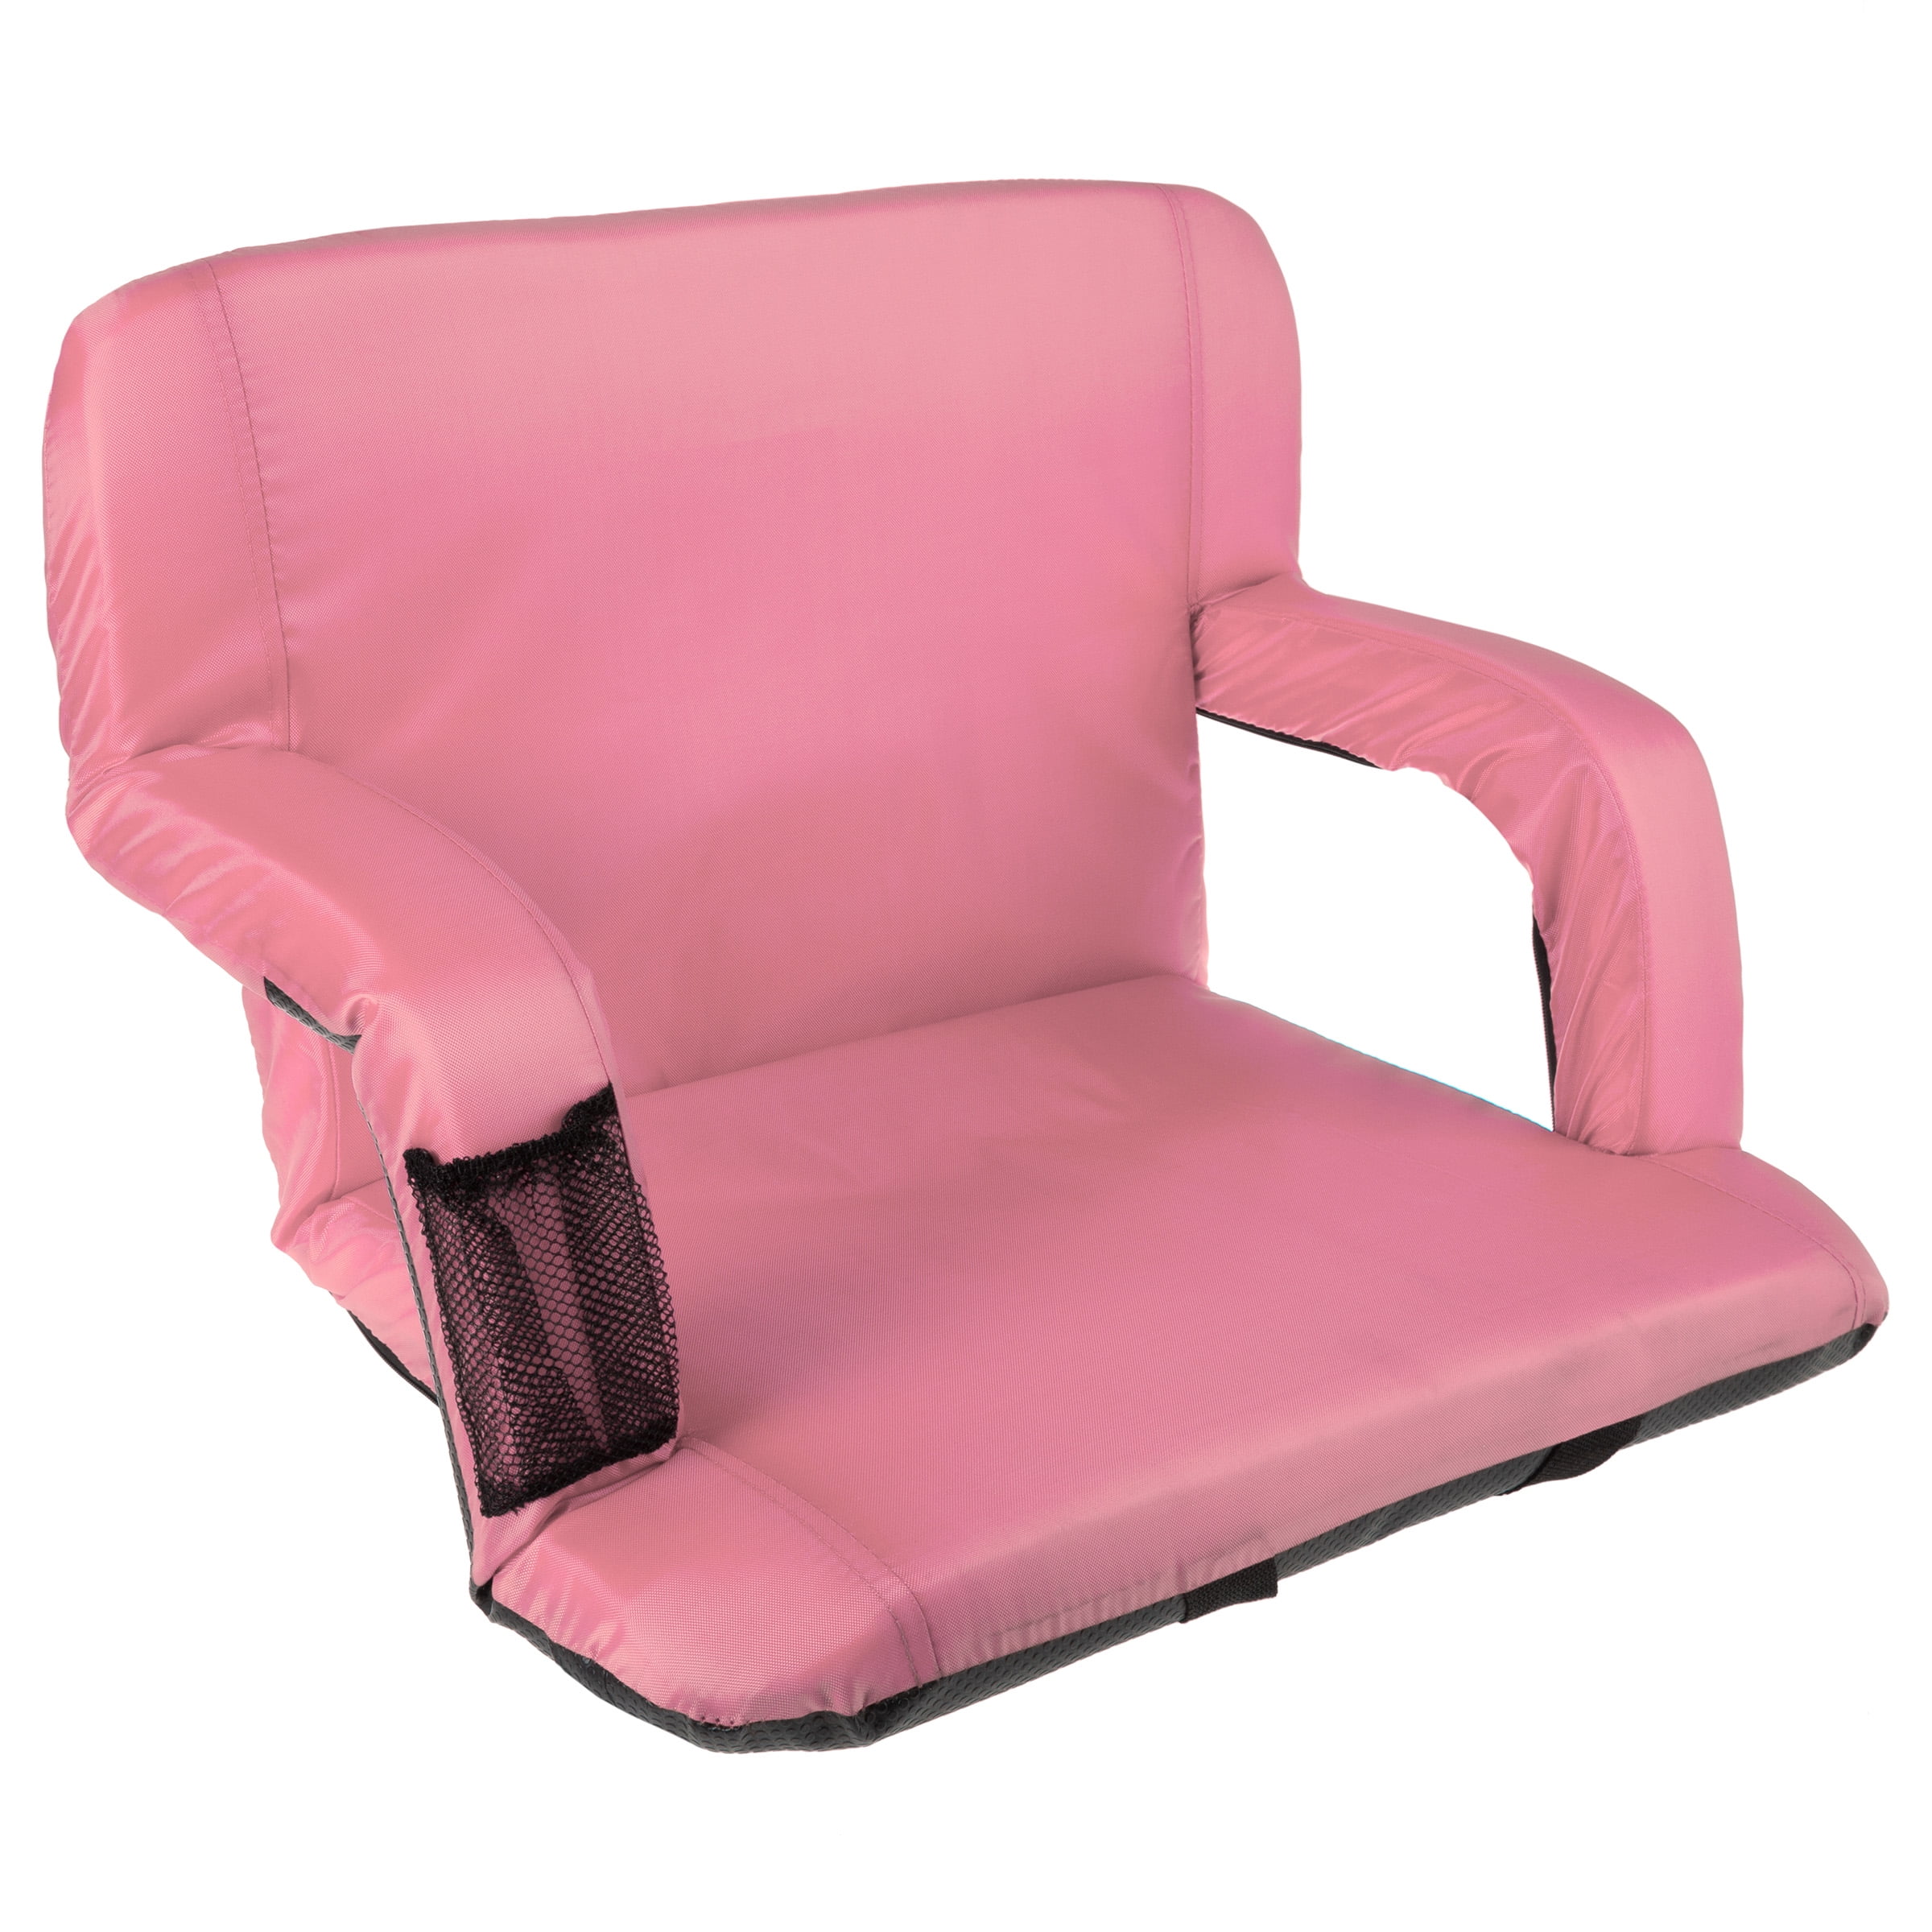 Padded Bleacher Stadium Seat Cushion,best Quality Seat Cushion,made in USA.  